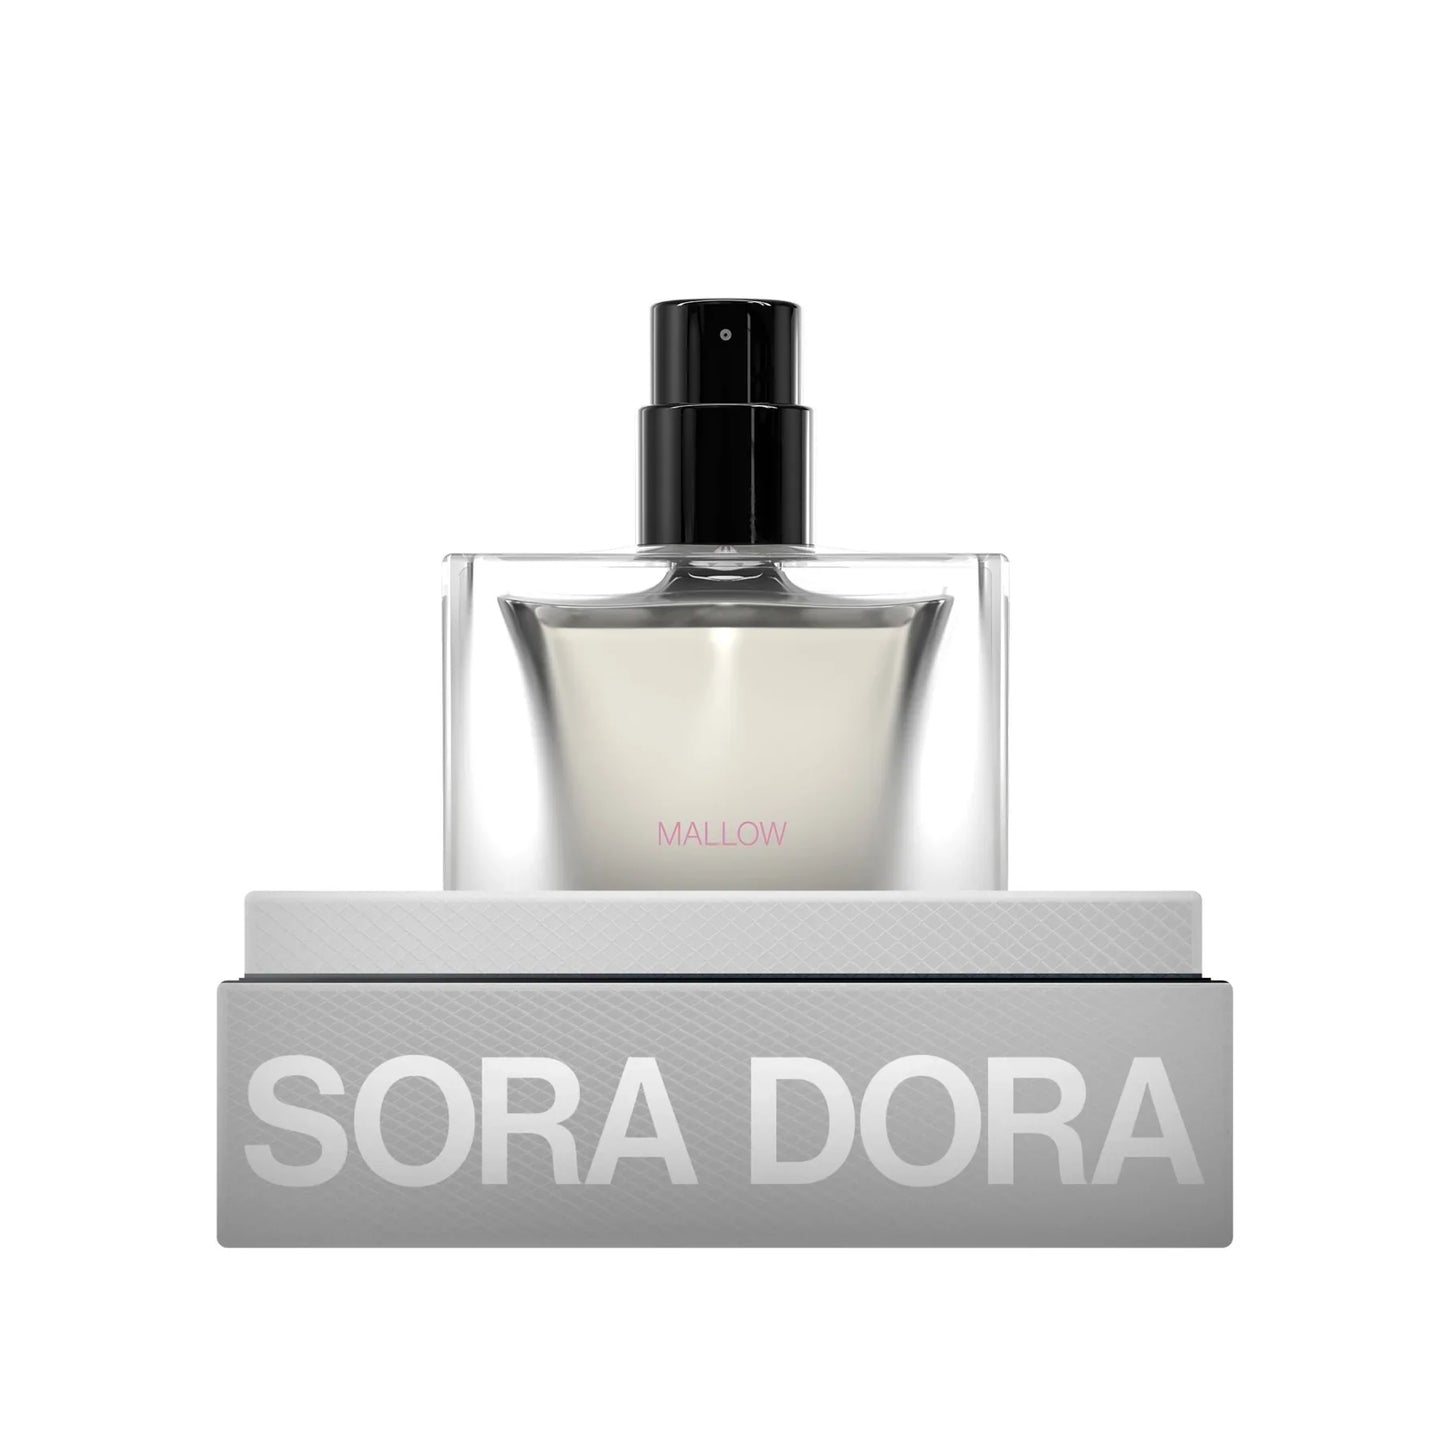 Mallow Sora Dora Extrait De Parfum Sample 2ml